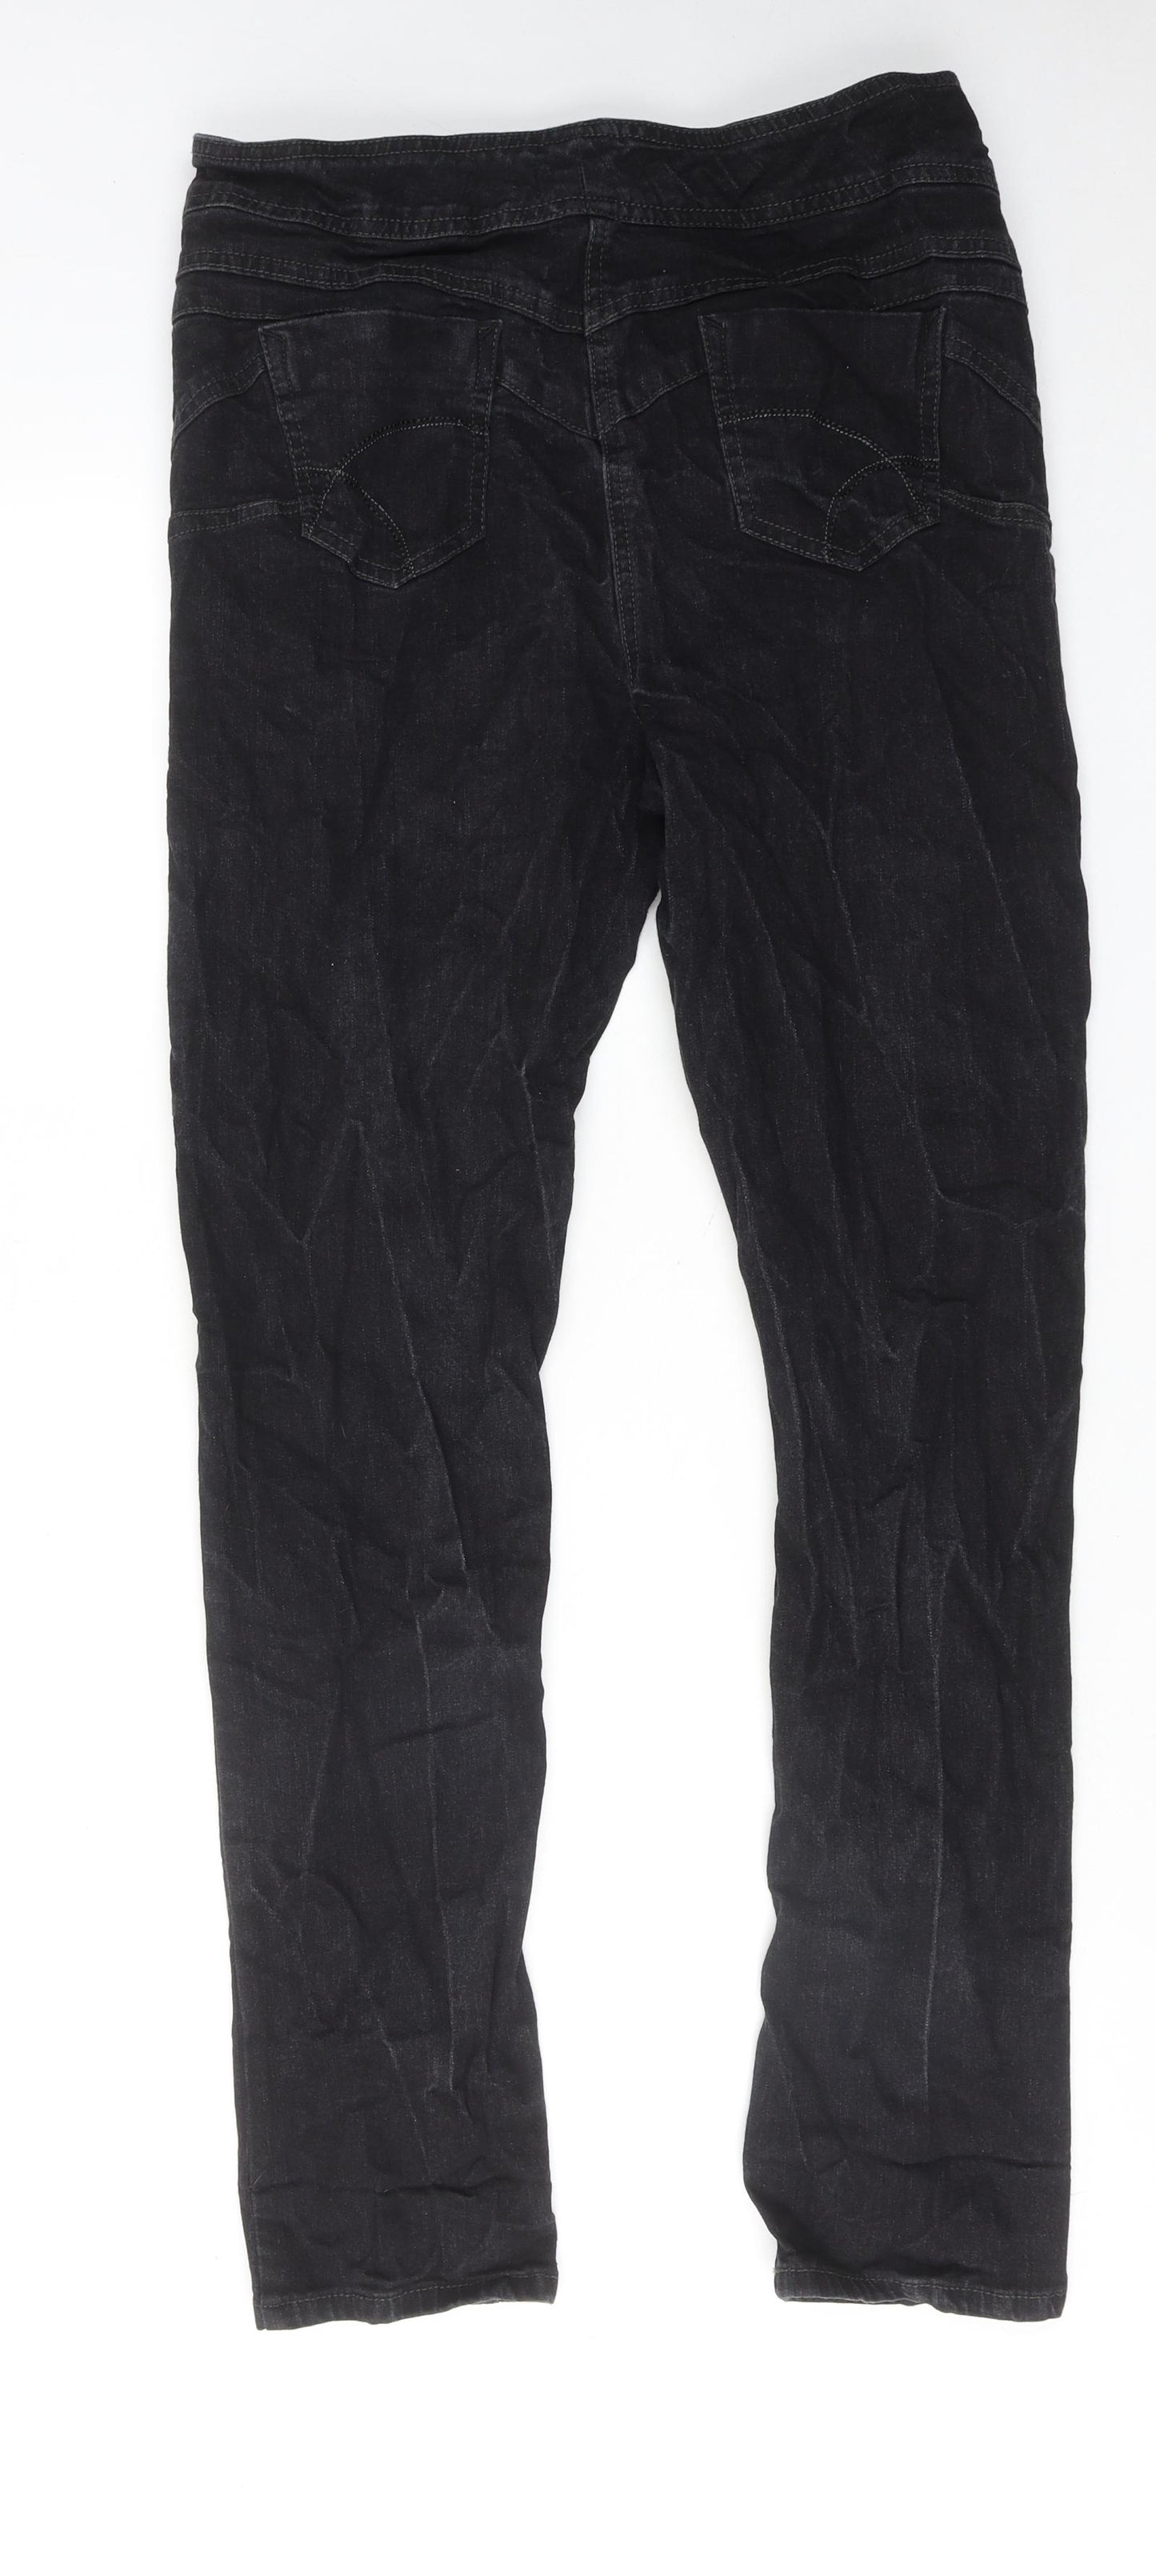 George Womens Black Cotton Skinny Jeans Size 16 Regular Zip